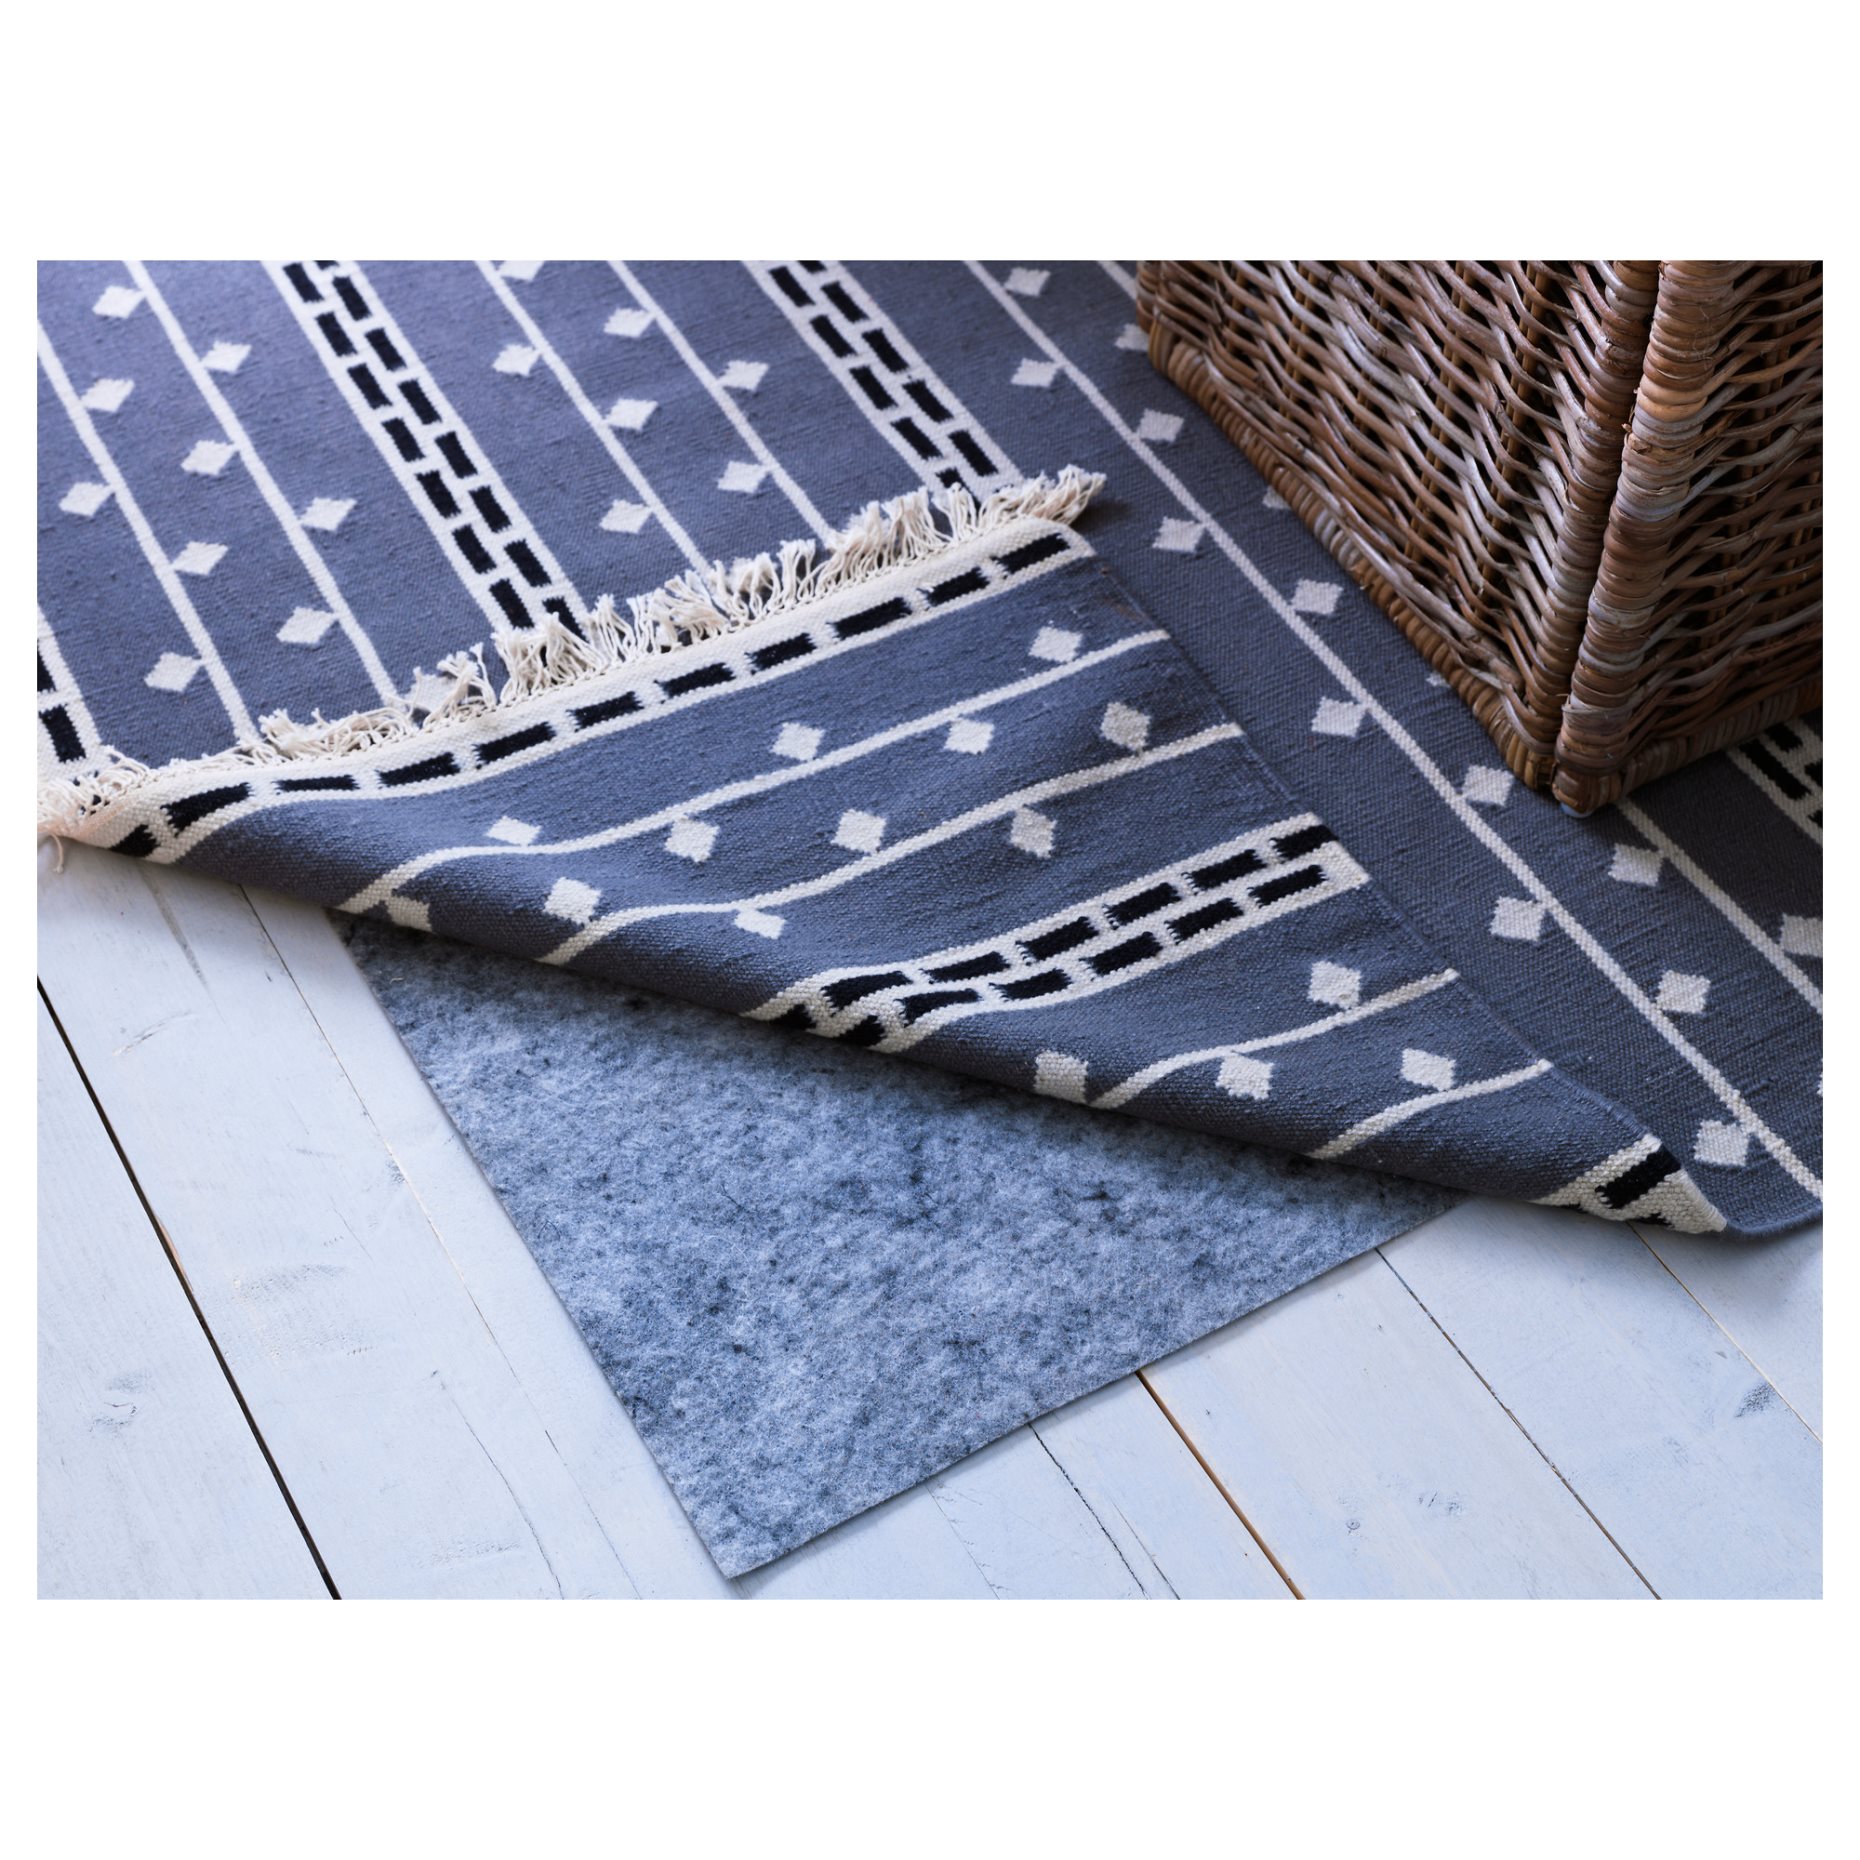 STOPP, rug underlay with anti-slip, 70x140 cm, 305.502.13